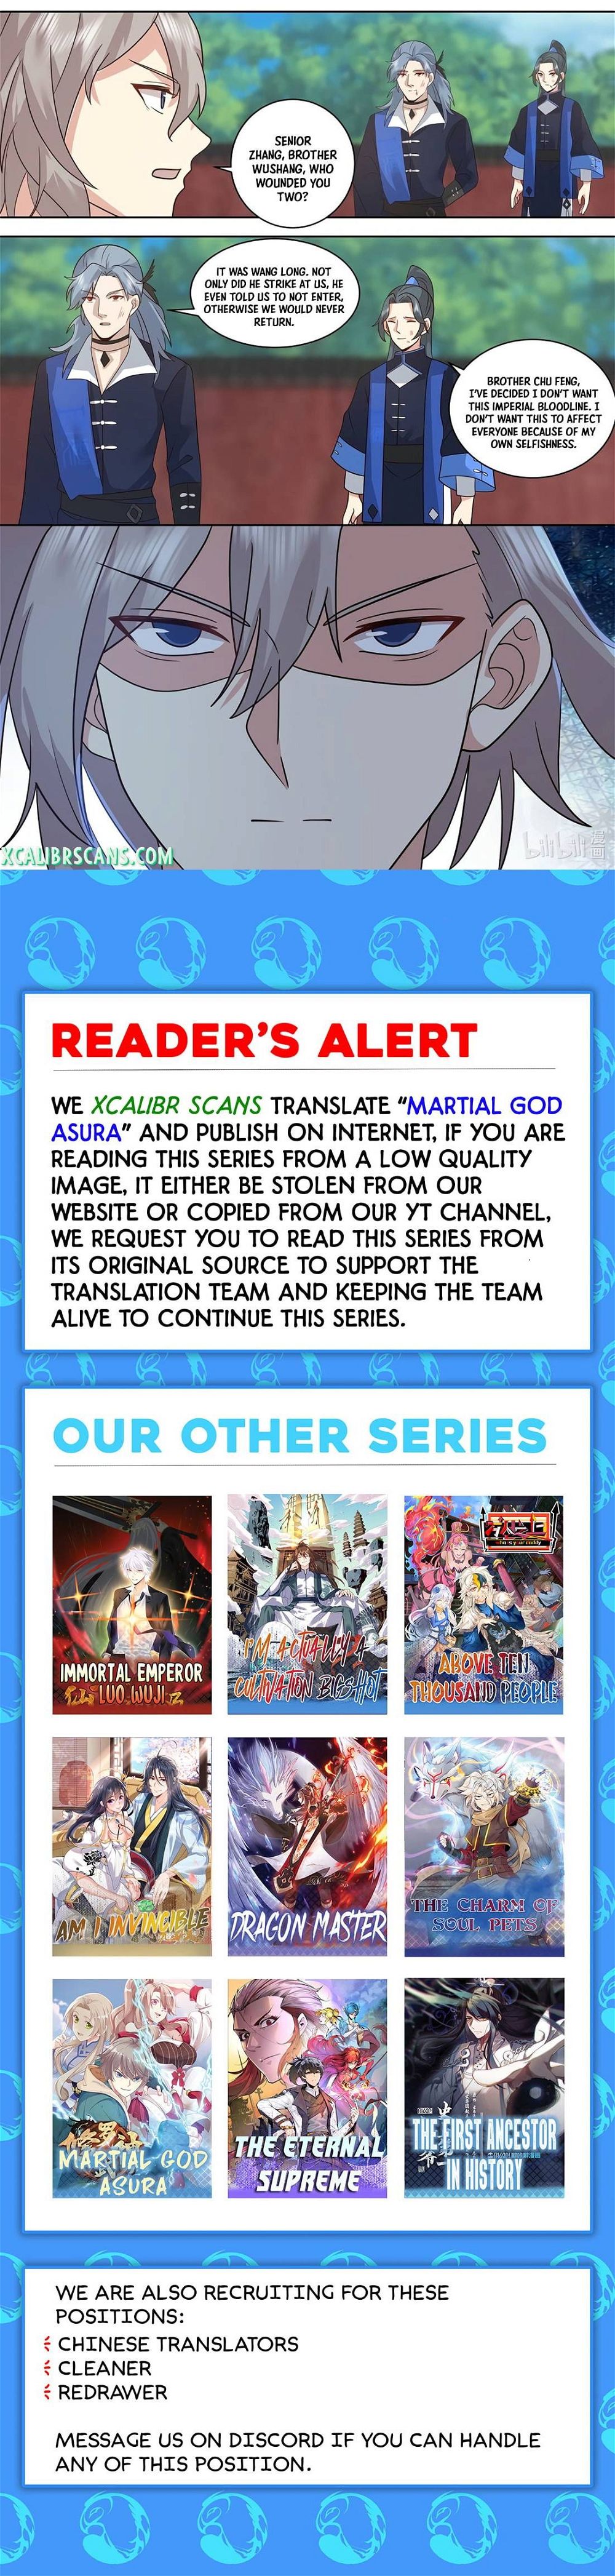 Martial God Asura Chapter 501 - Page 10